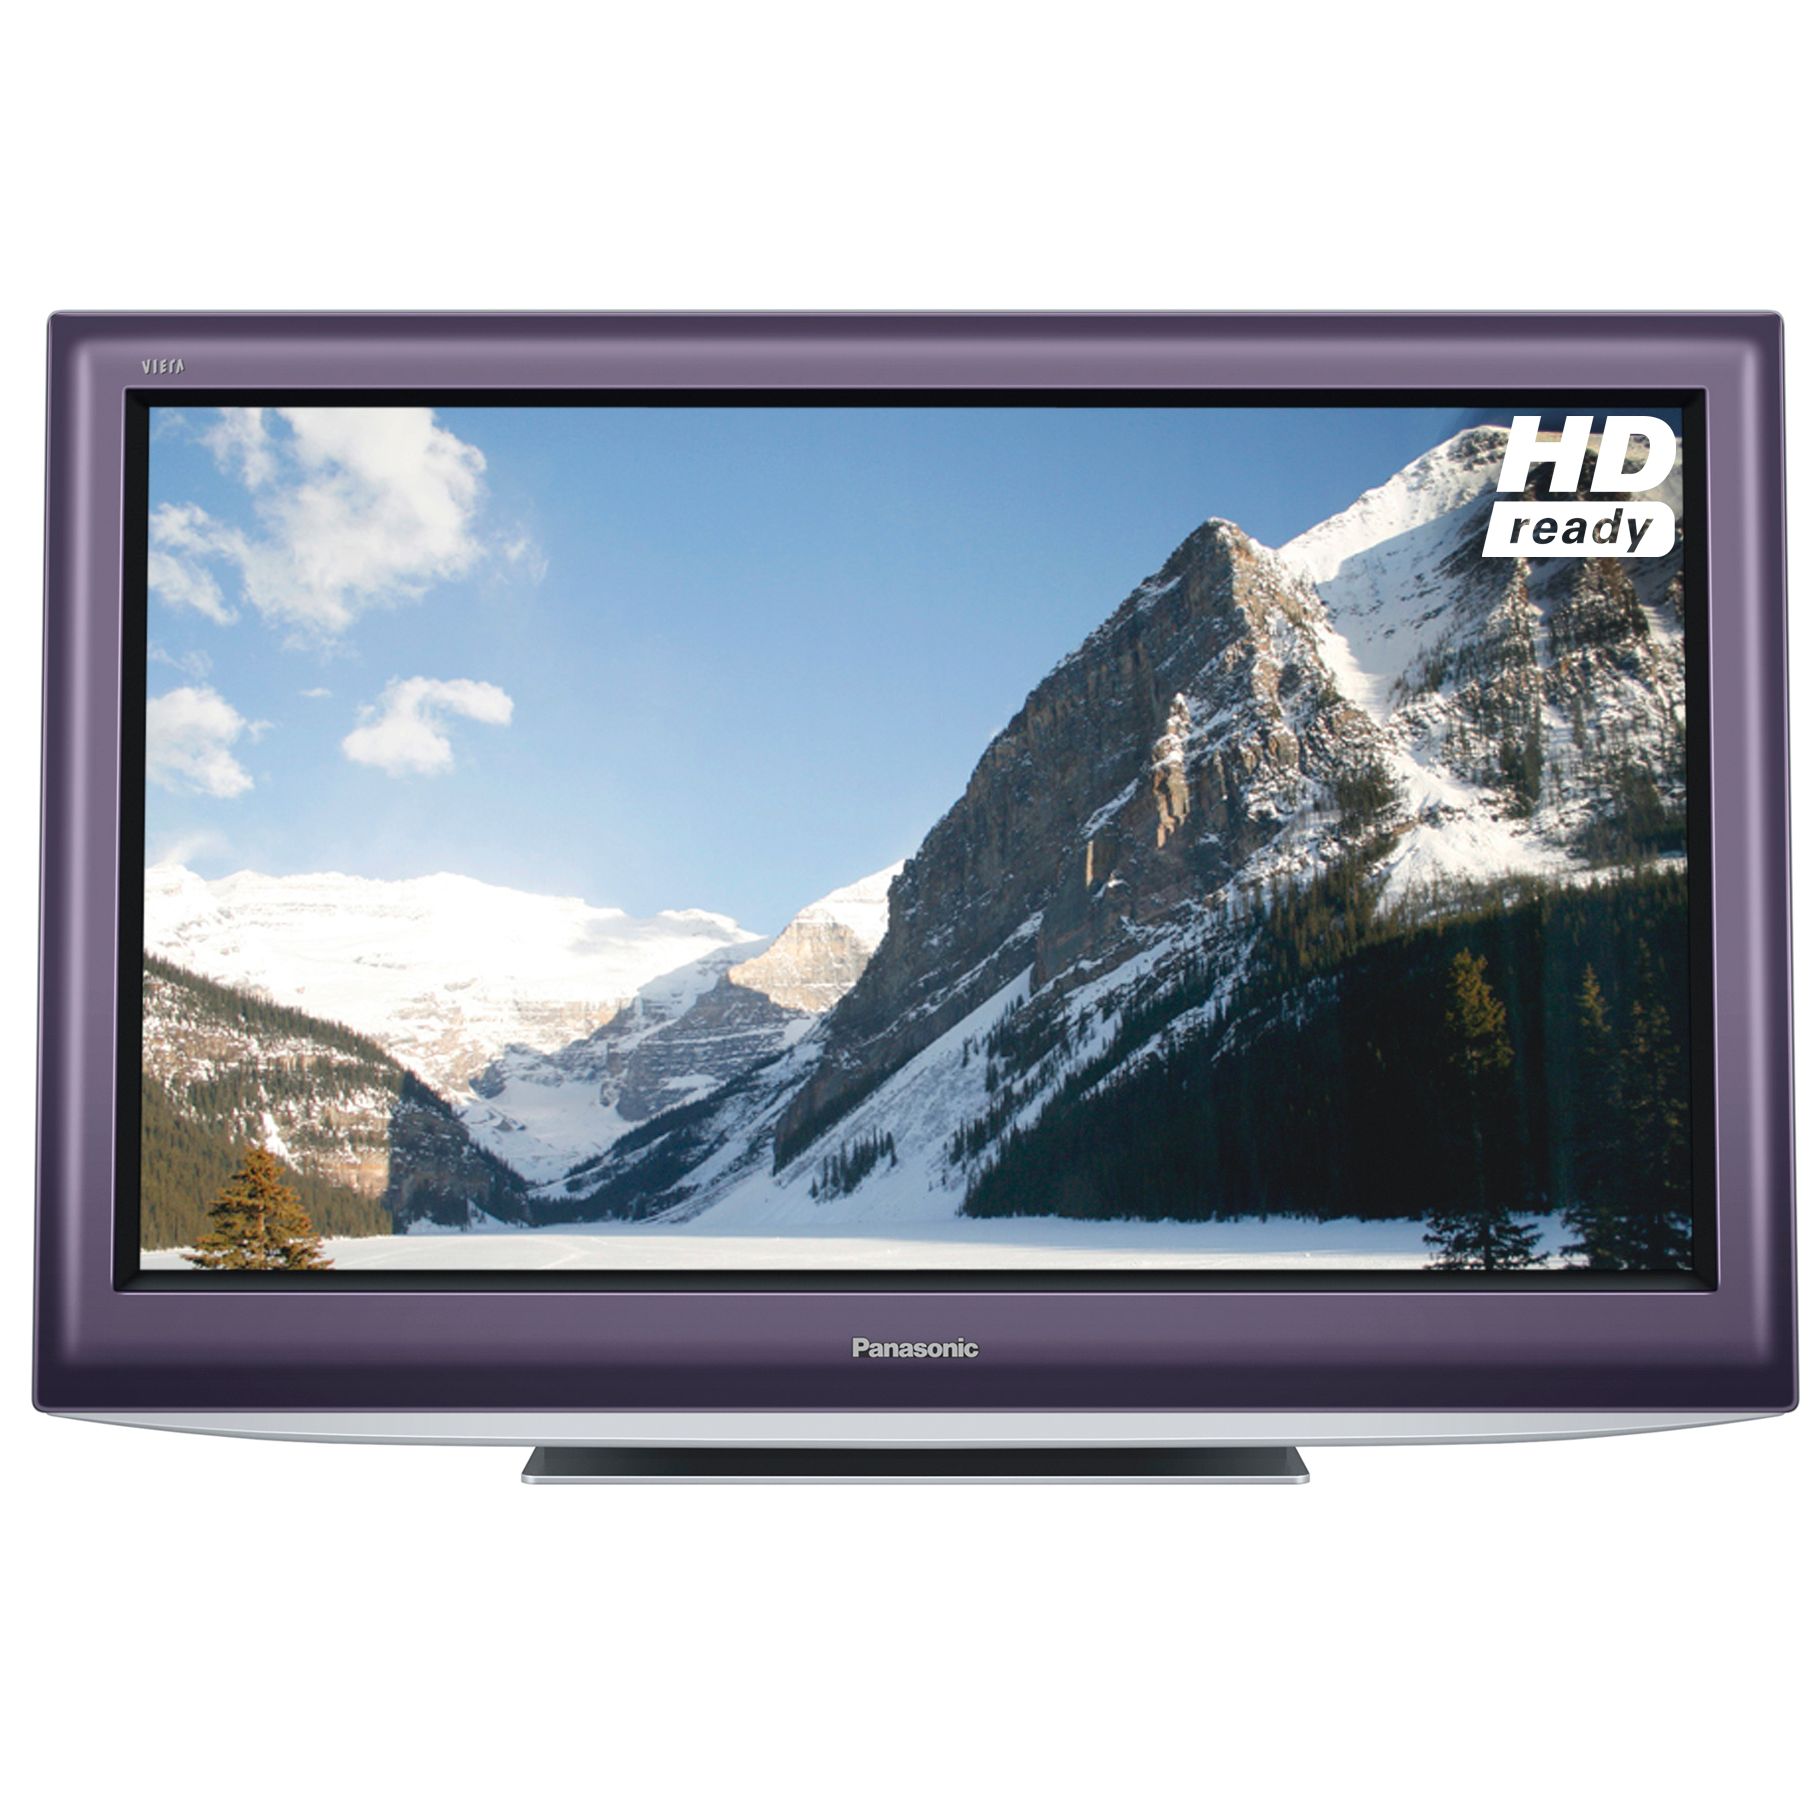 Panasonic Viera TX-L22D28BP LCD/LED HD Ready Television, 22 Inch, Purple at John Lewis